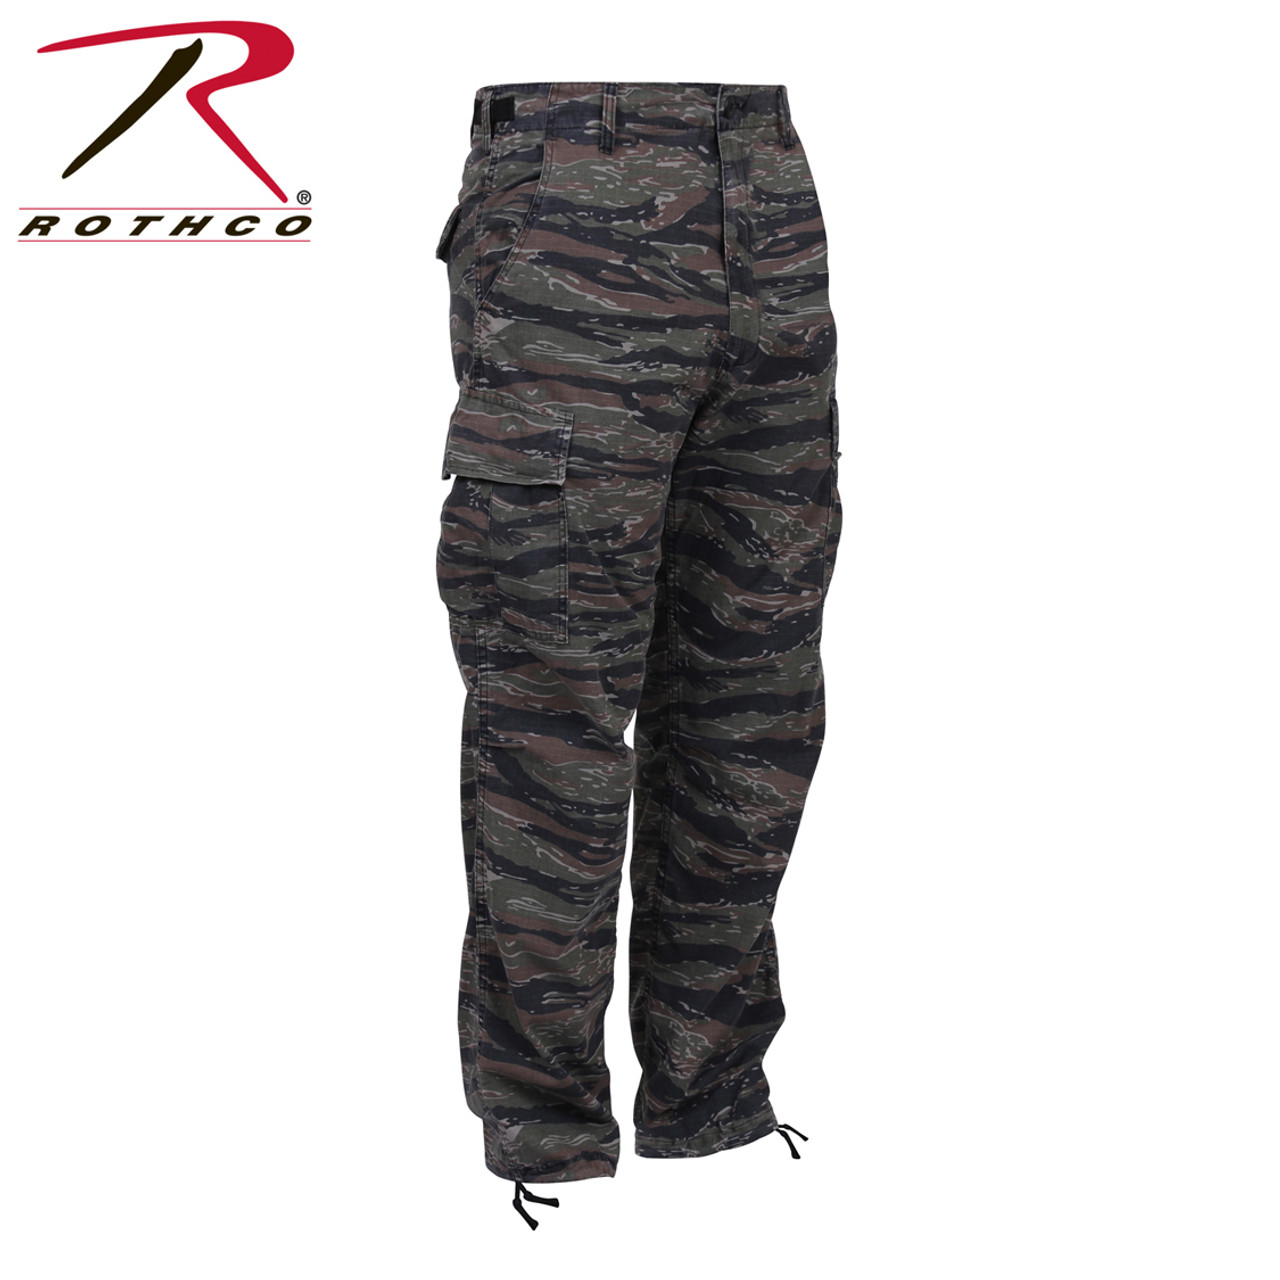 Lacoste Men's Camouflage Cargo Pants 33 x 32 NWT Green Black Cotton Ripstop  Camo | eBay